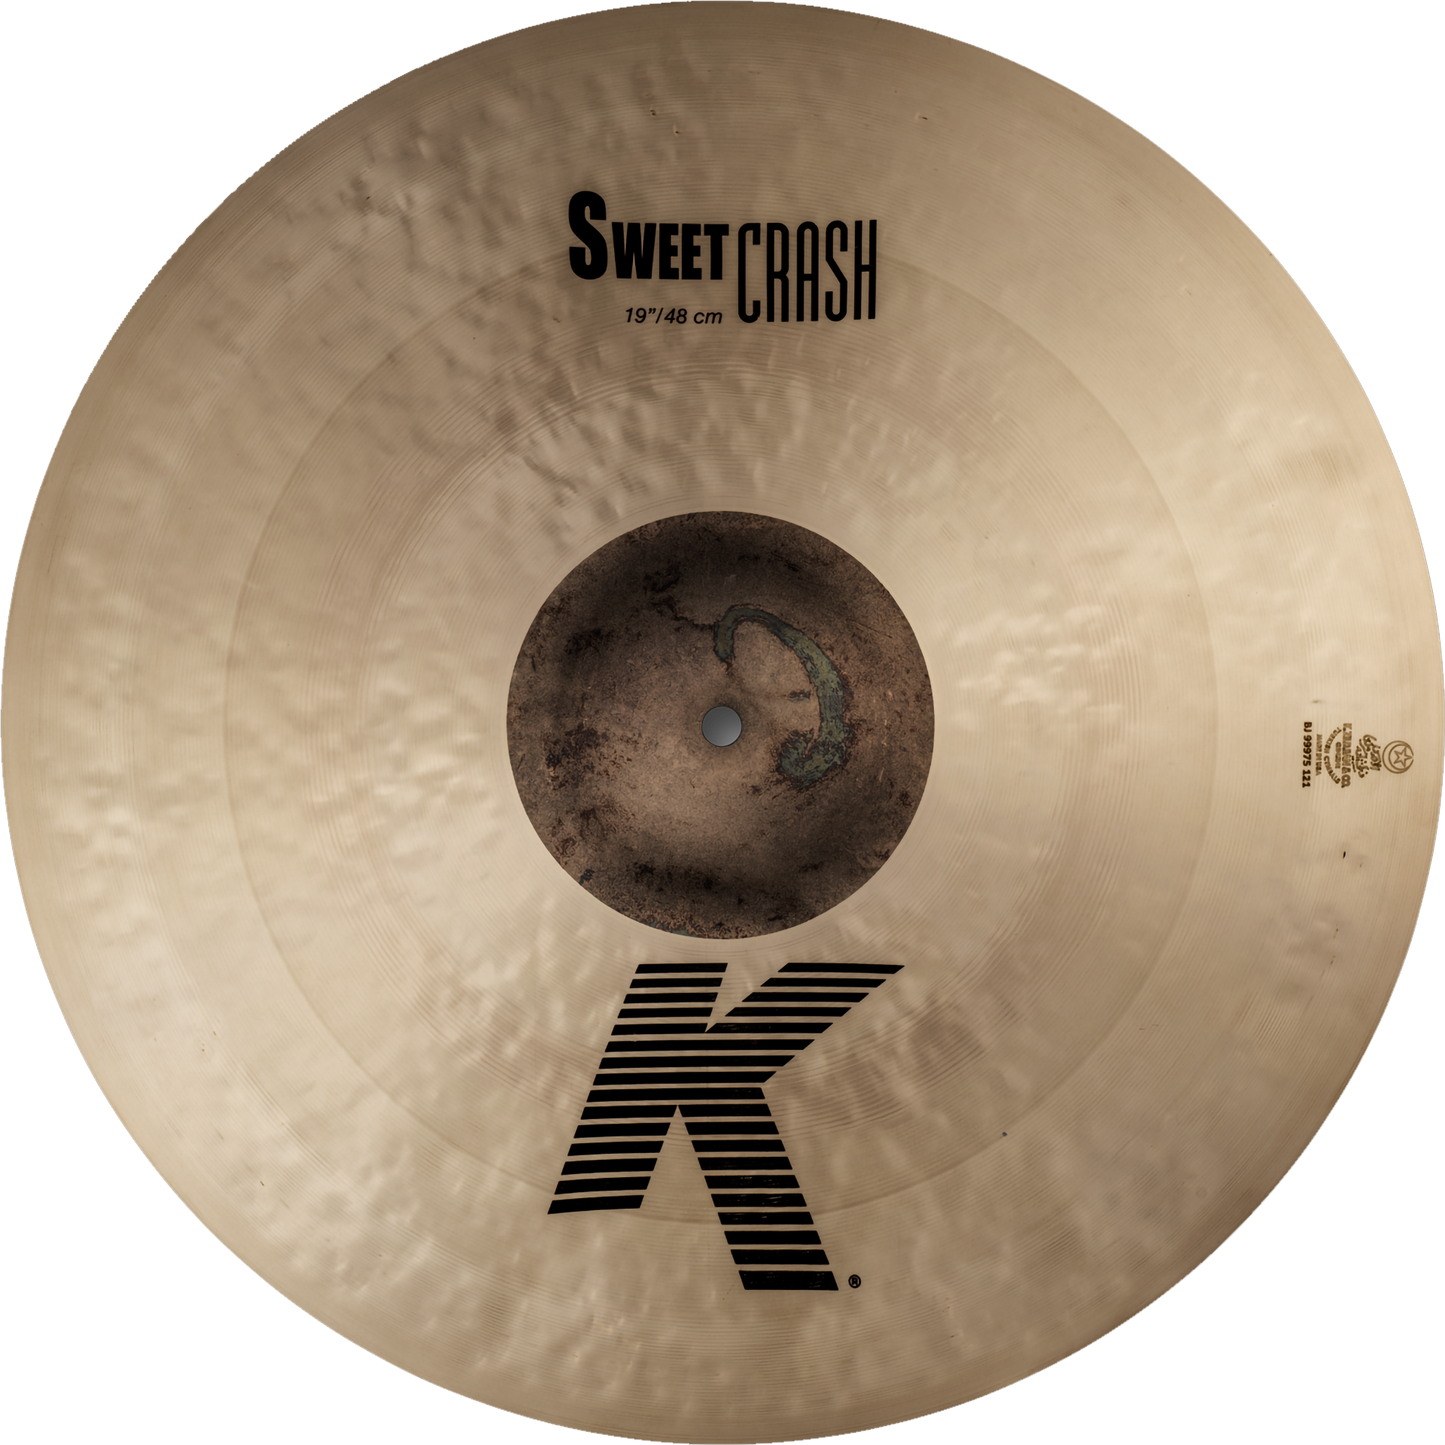 Zildjian K Zildjian Sweet Cymbal Pack